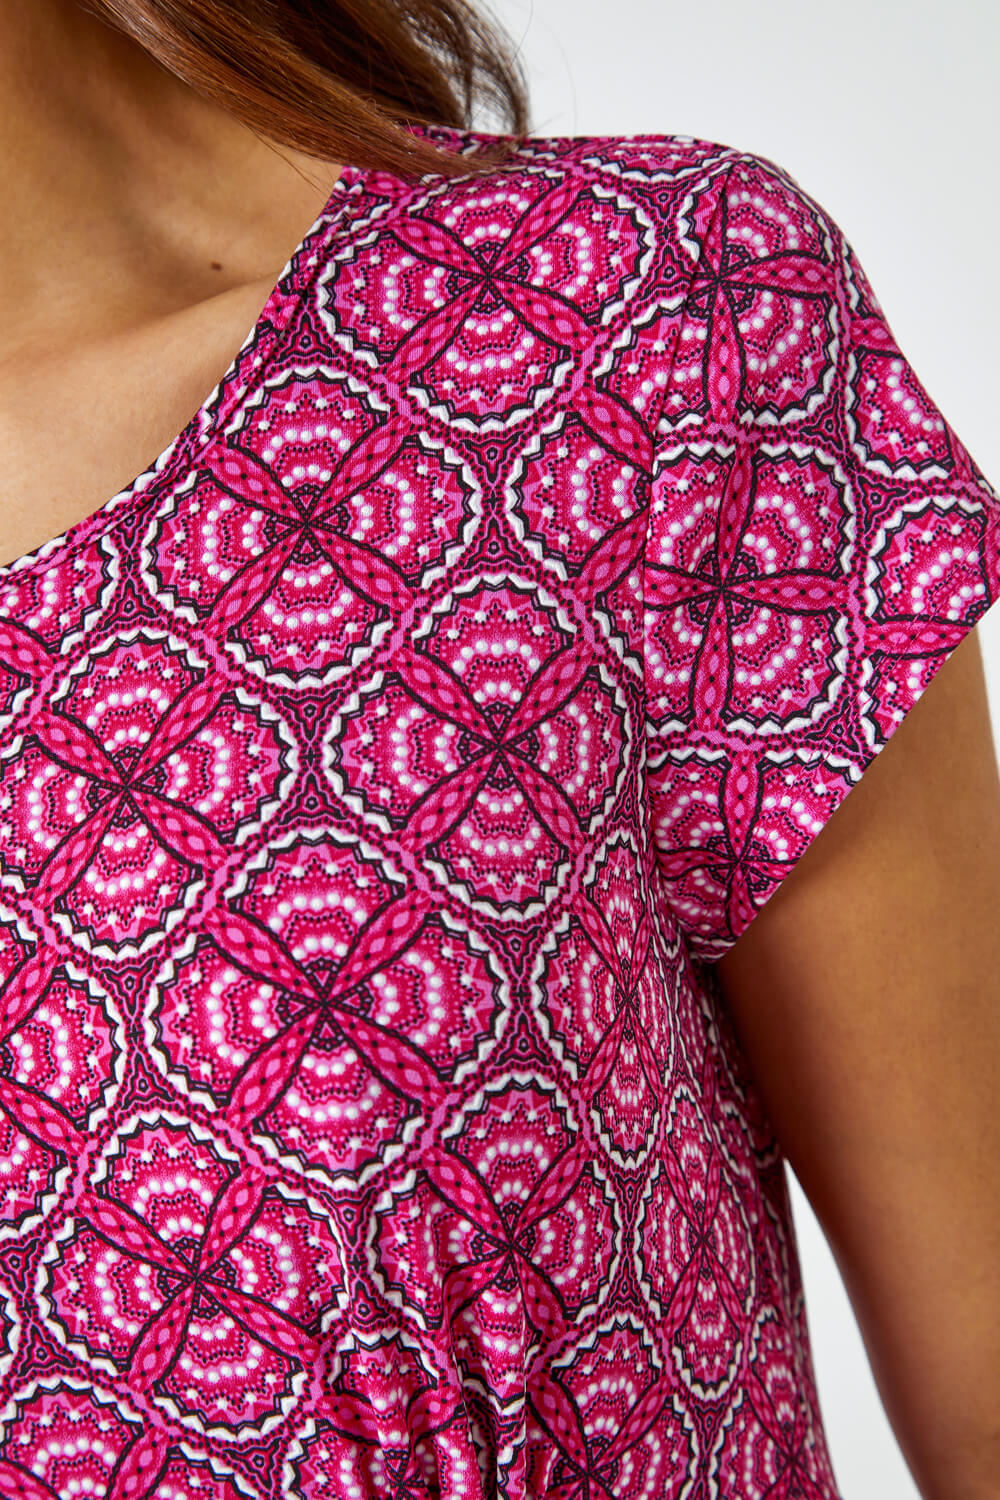 PINK Geo Print Textured Stretch Dress, Image 5 of 5